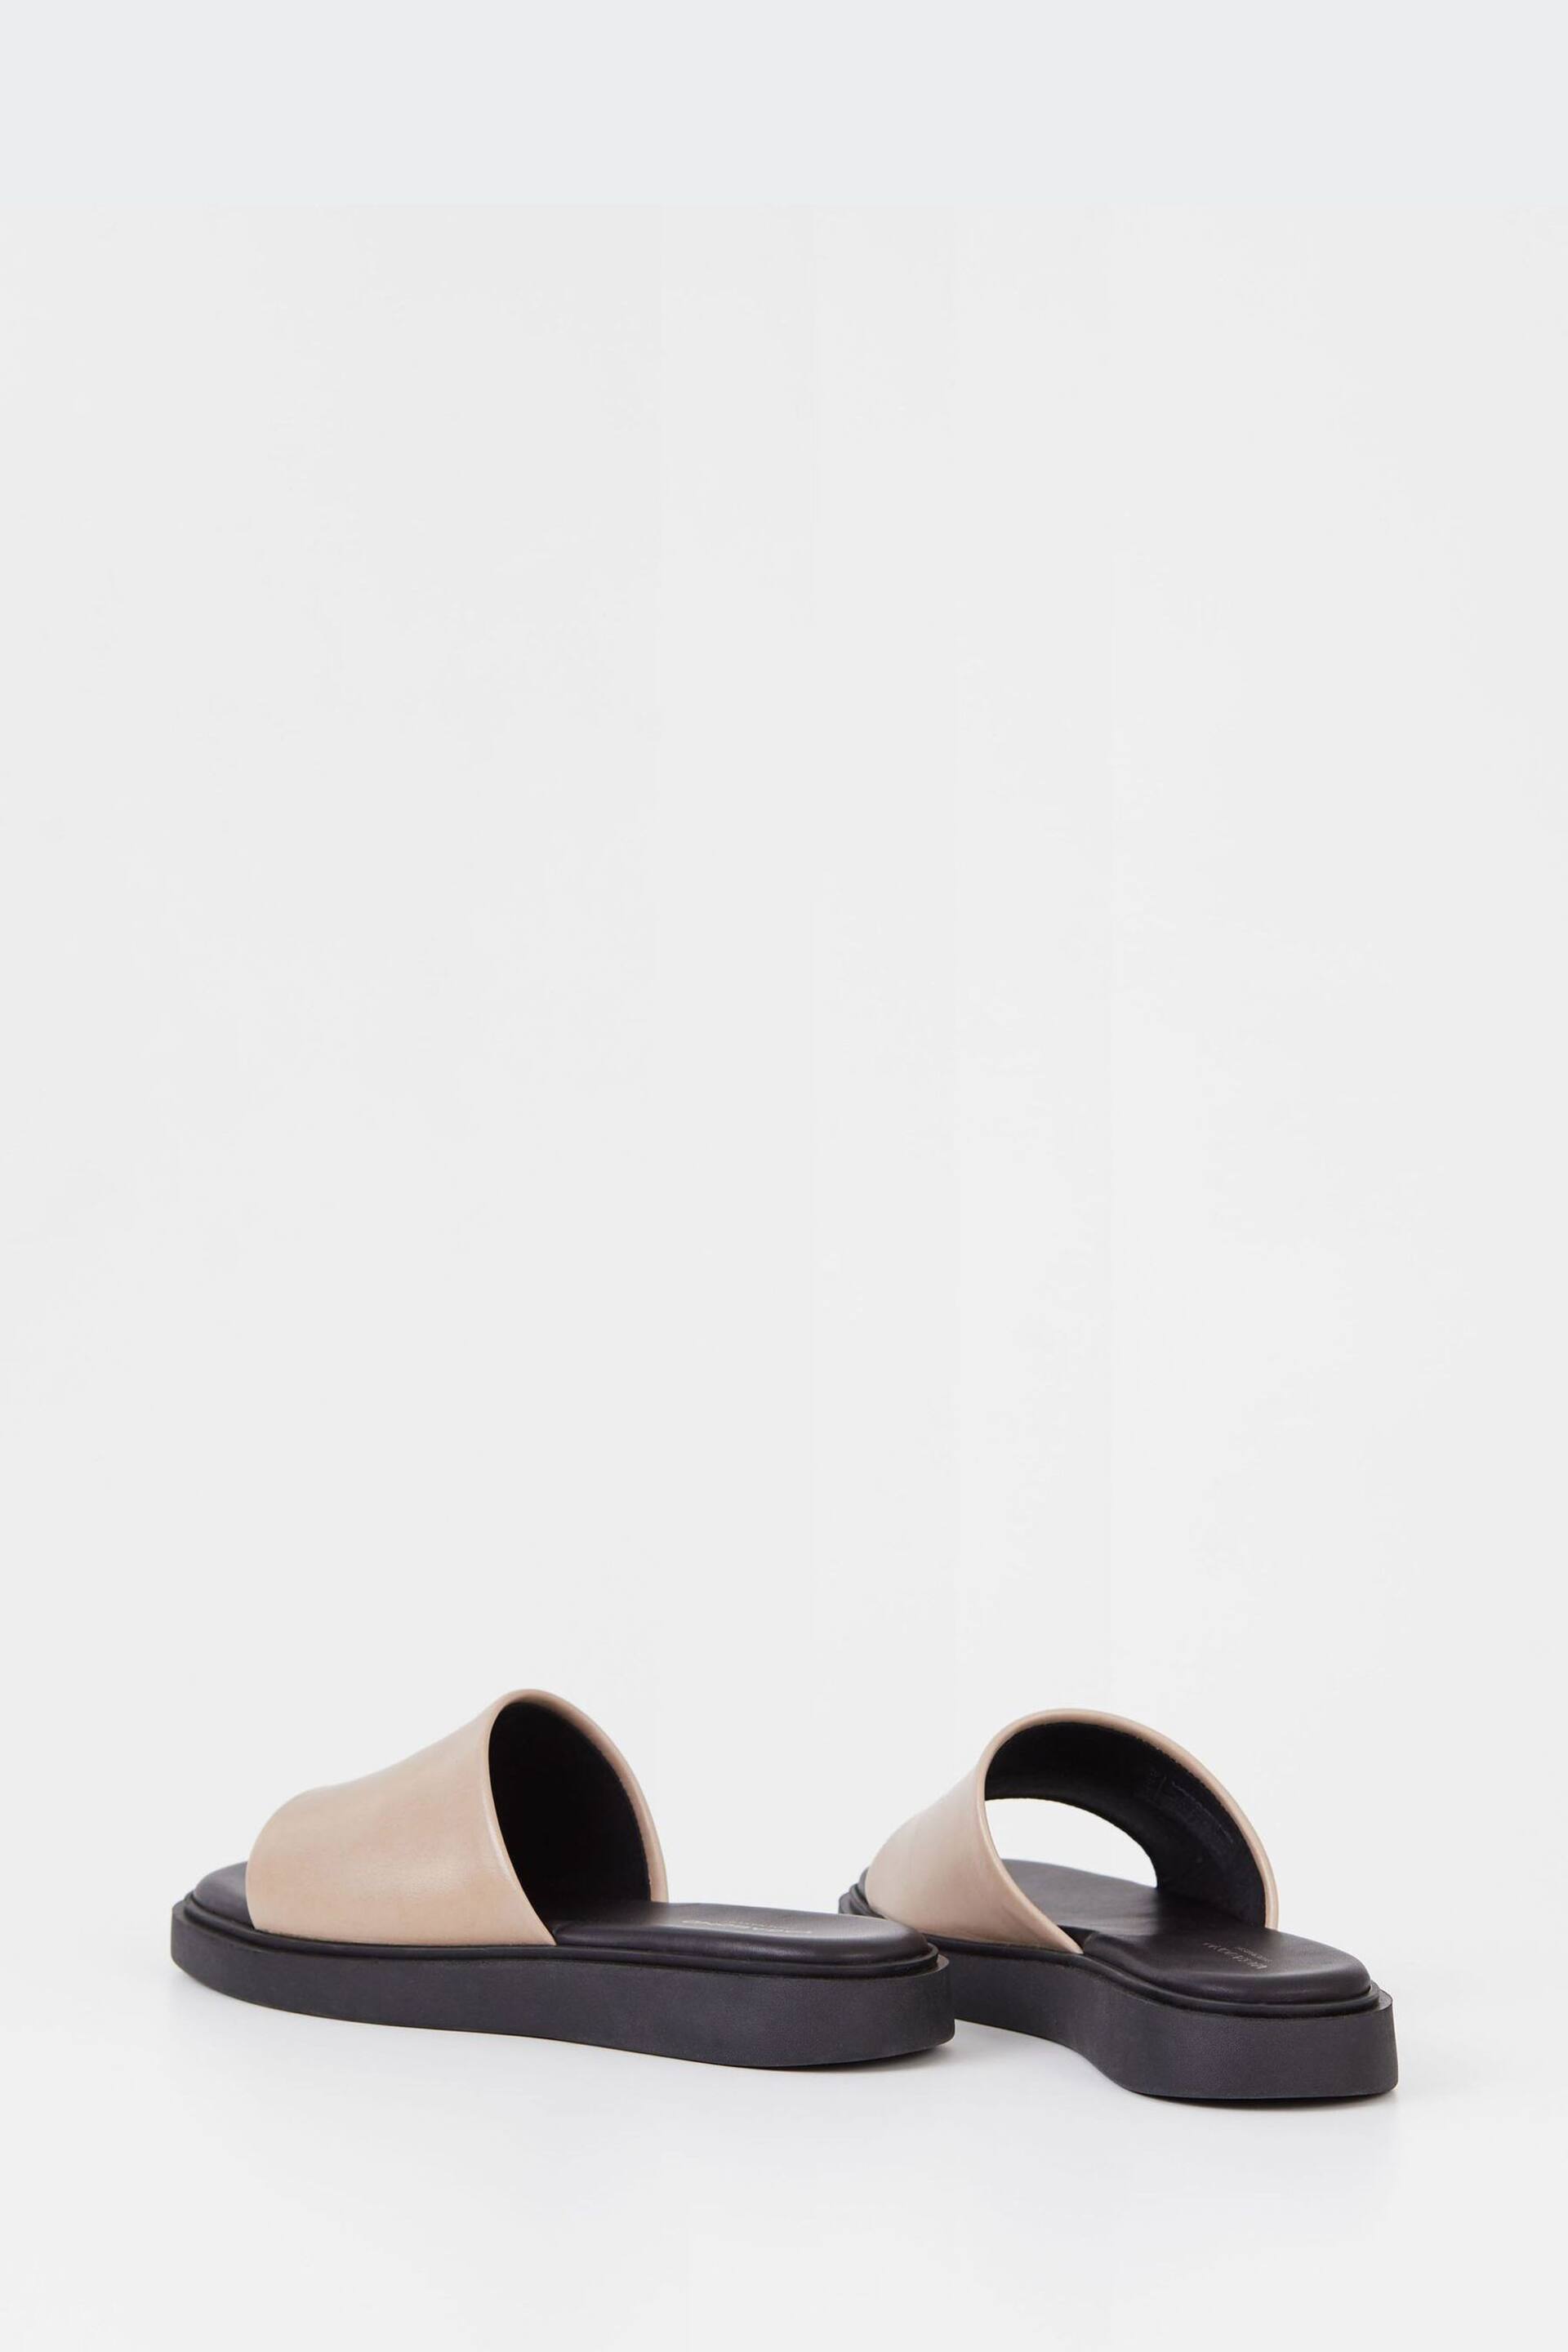 Vagabond Shoemakers Cream Connie Sandals - Image 3 of 3